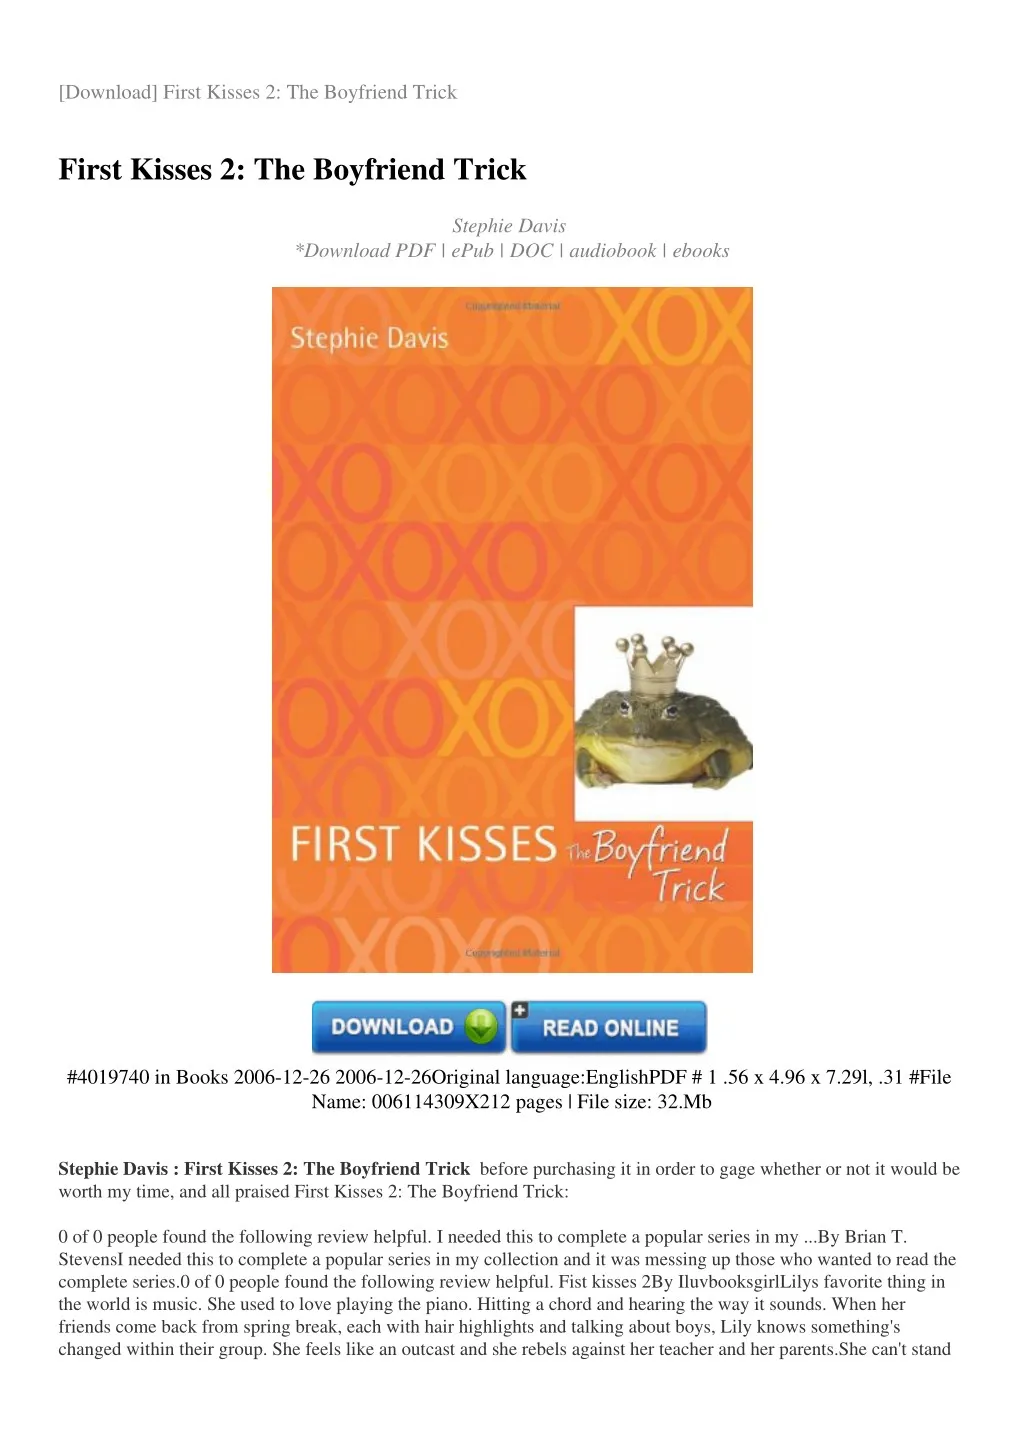 download first kisses 2 the boyfriend trick